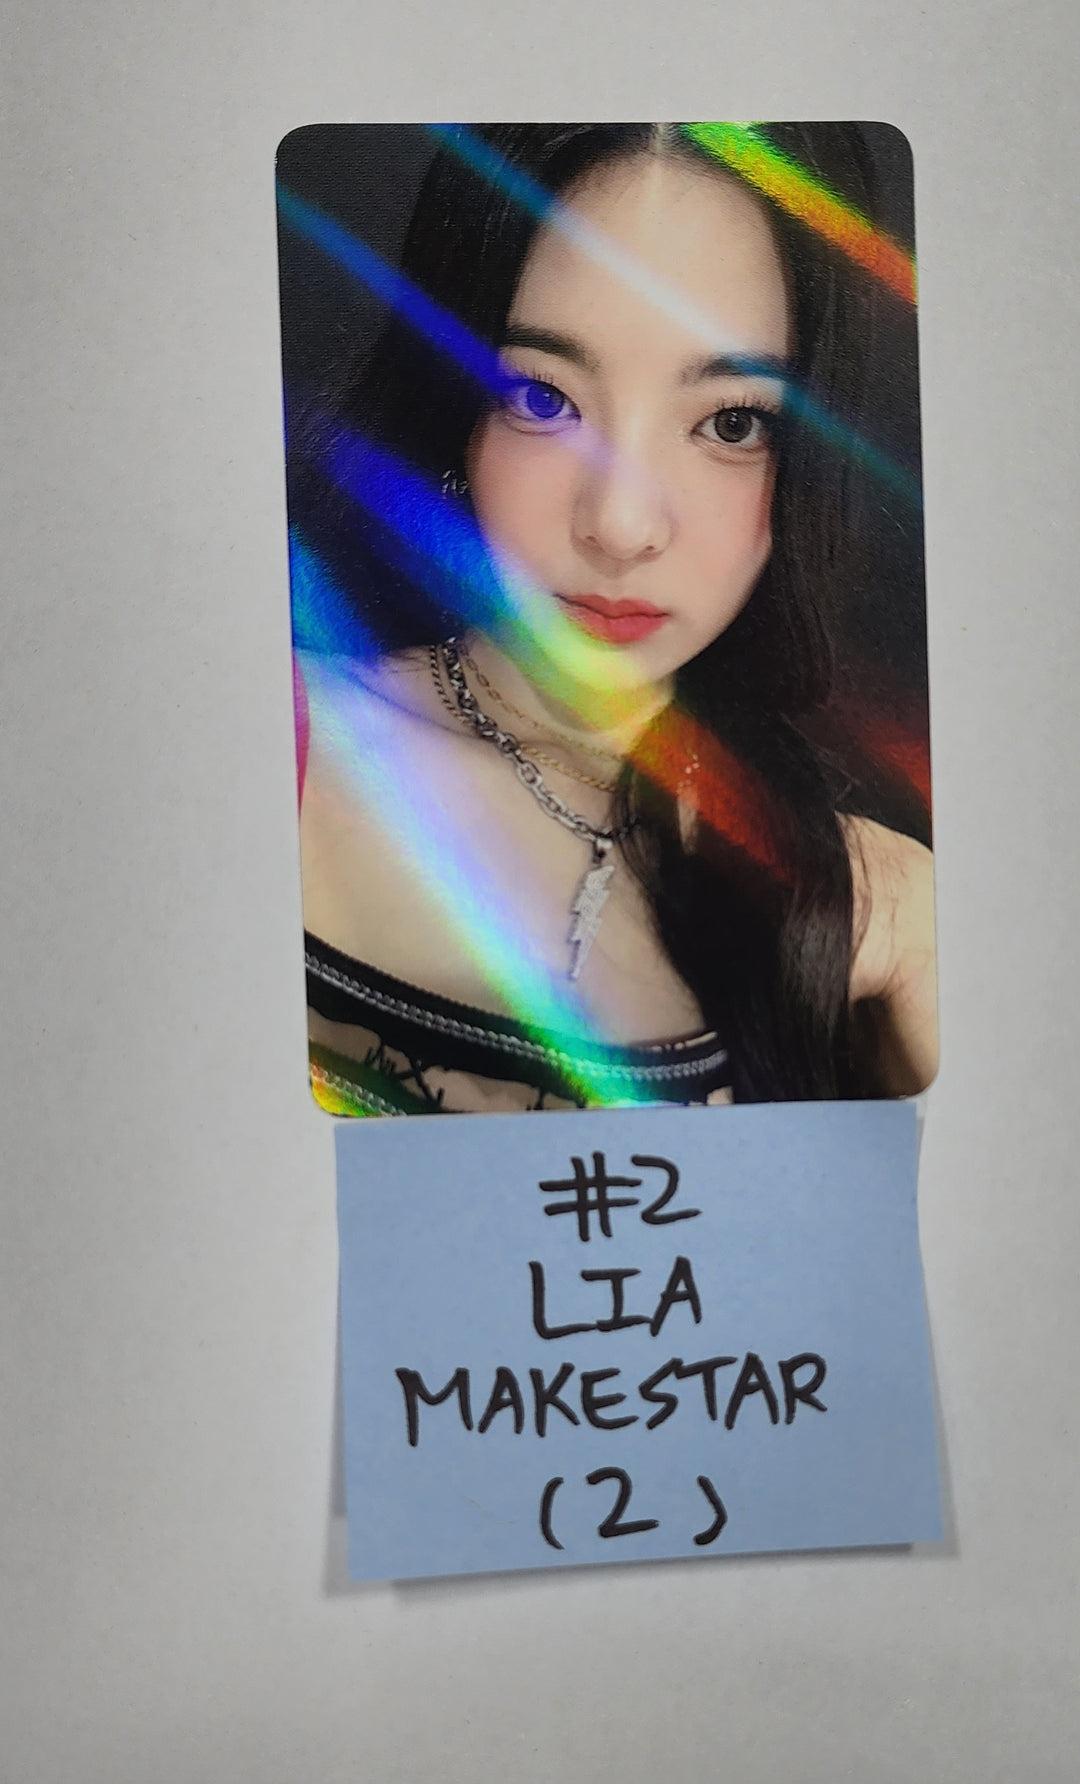 ITZY 'CHECKMATE' - Makestar Fansign Event Hologram Photocard